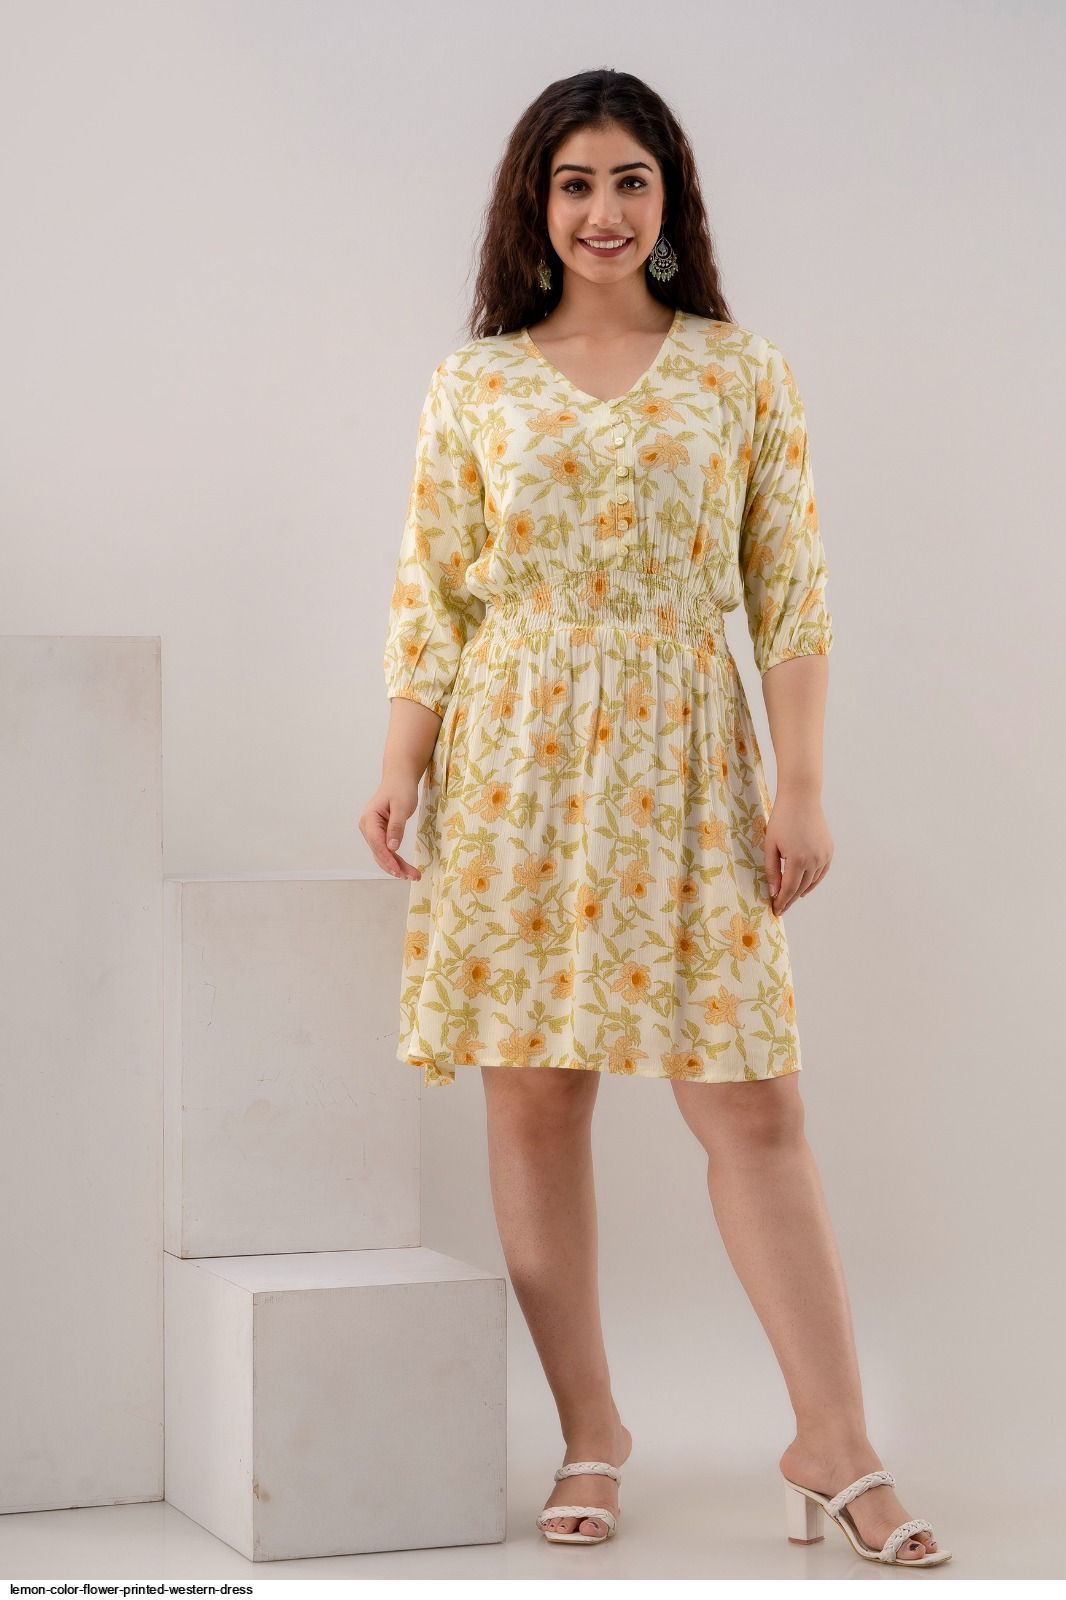 Lemon colour is best for summer | Stylish dress book, Designer dresses  casual, Fashion design dress